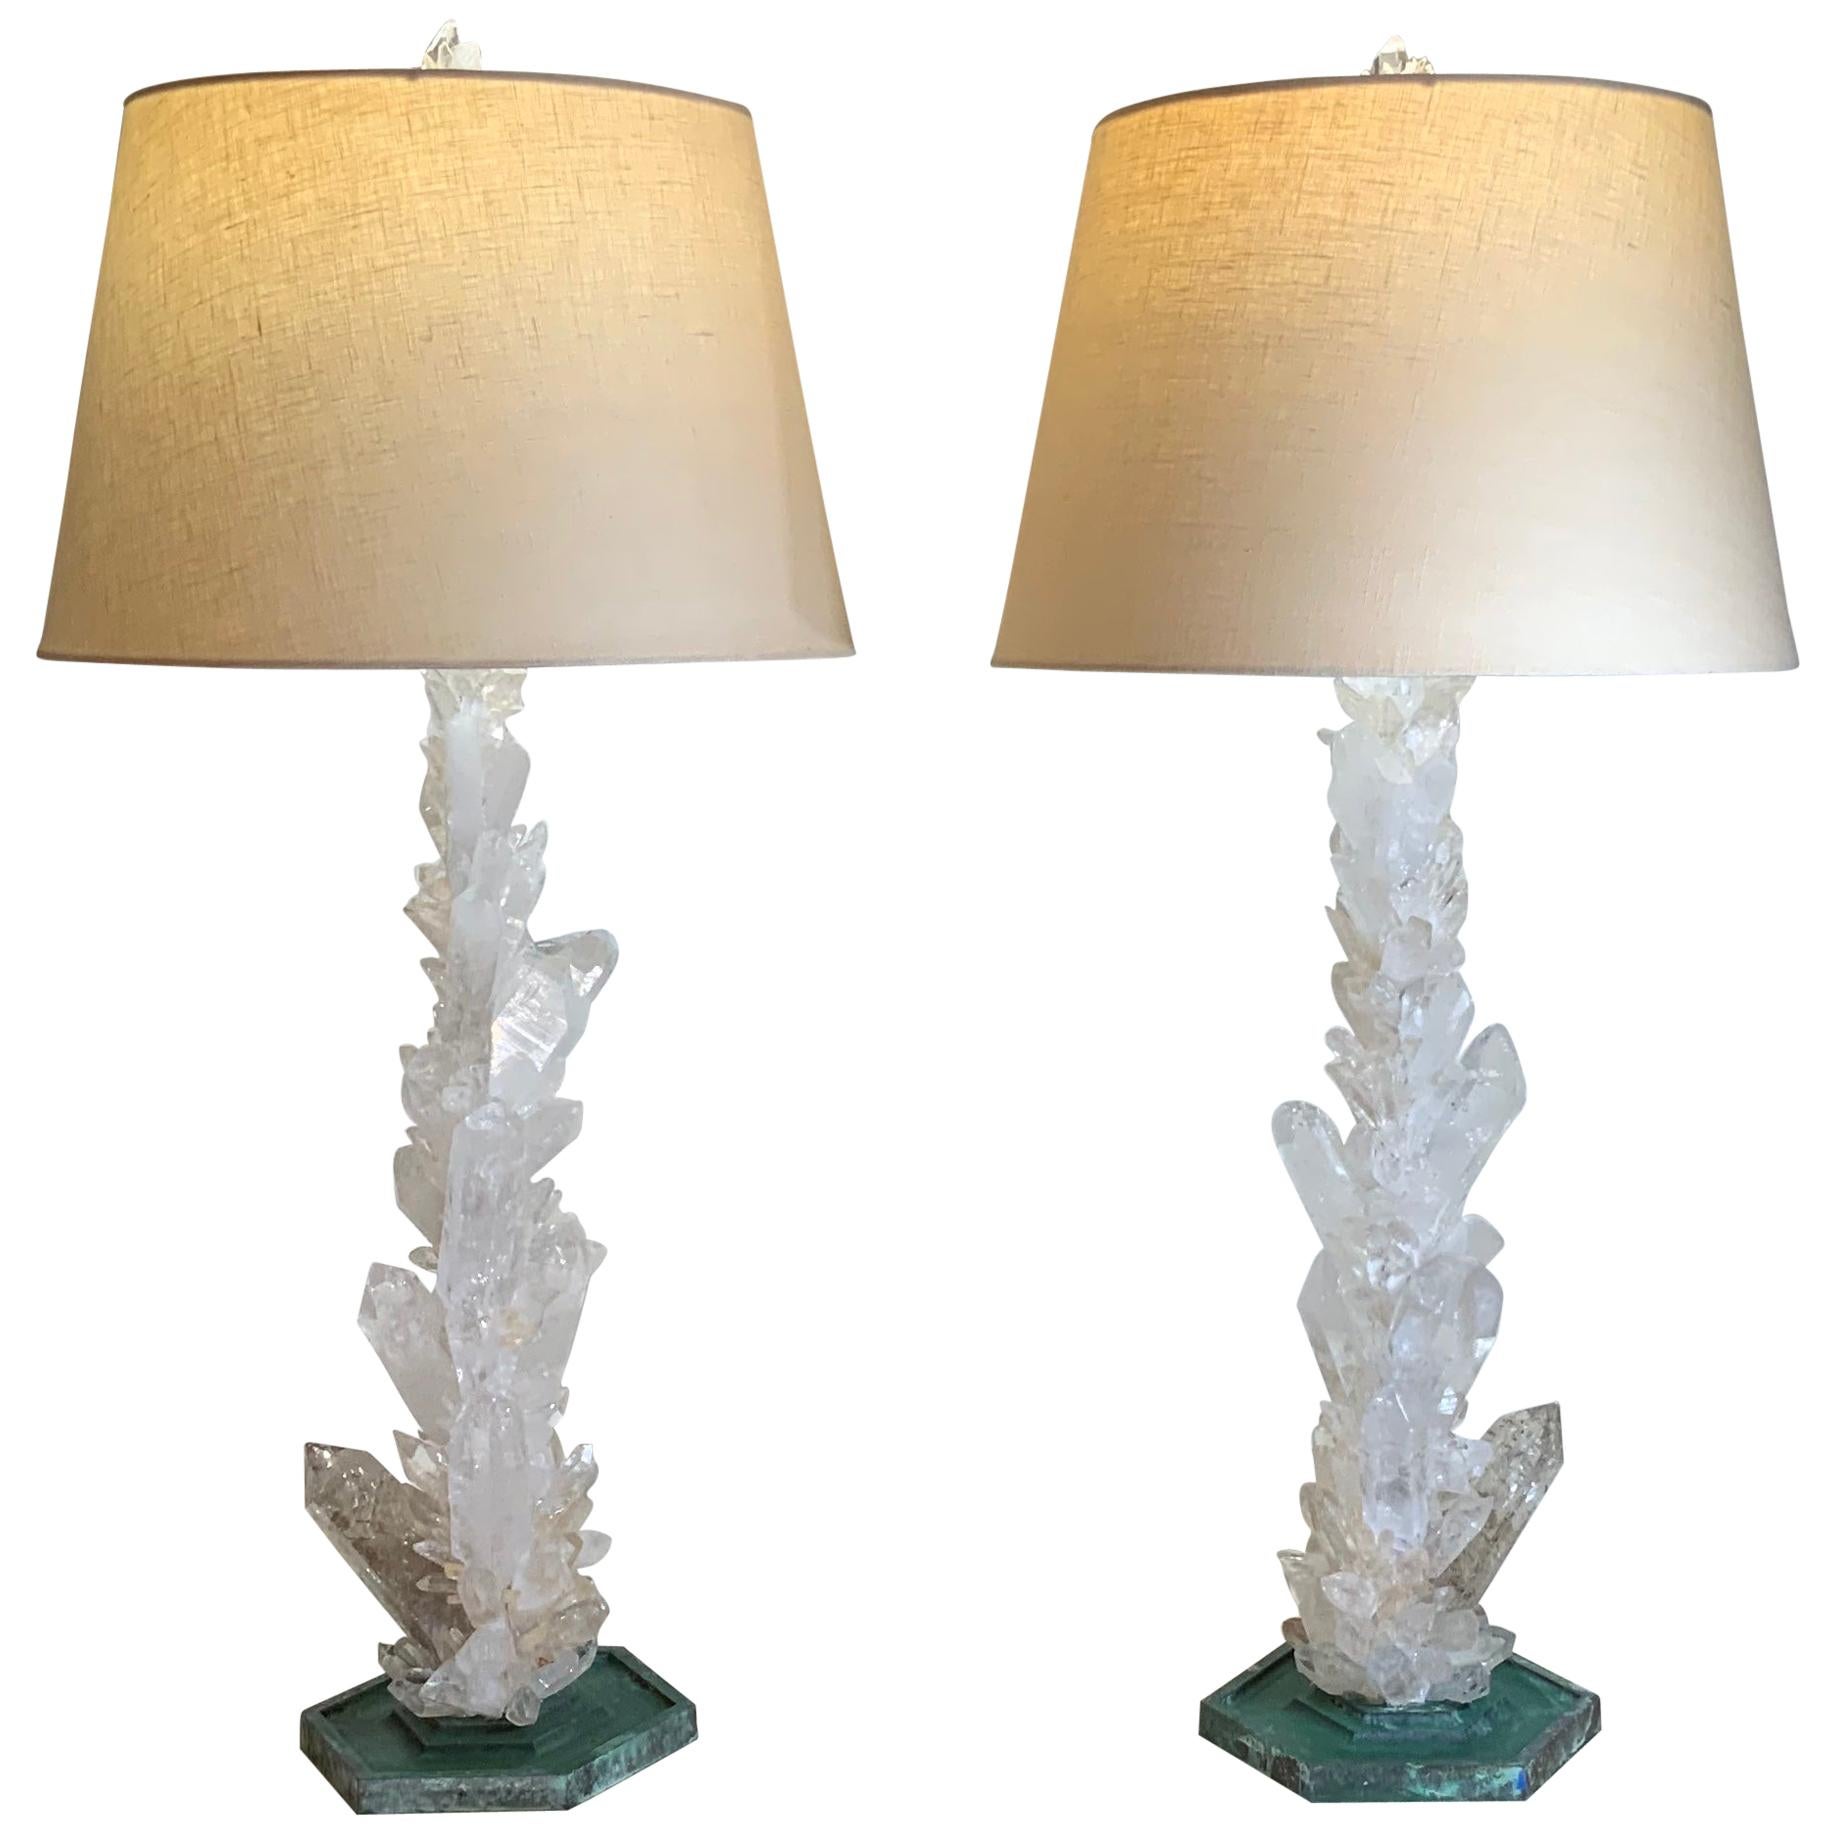 Pair of Large White Rock Quartz Crystal Table Lamps by, Joseph Malekan